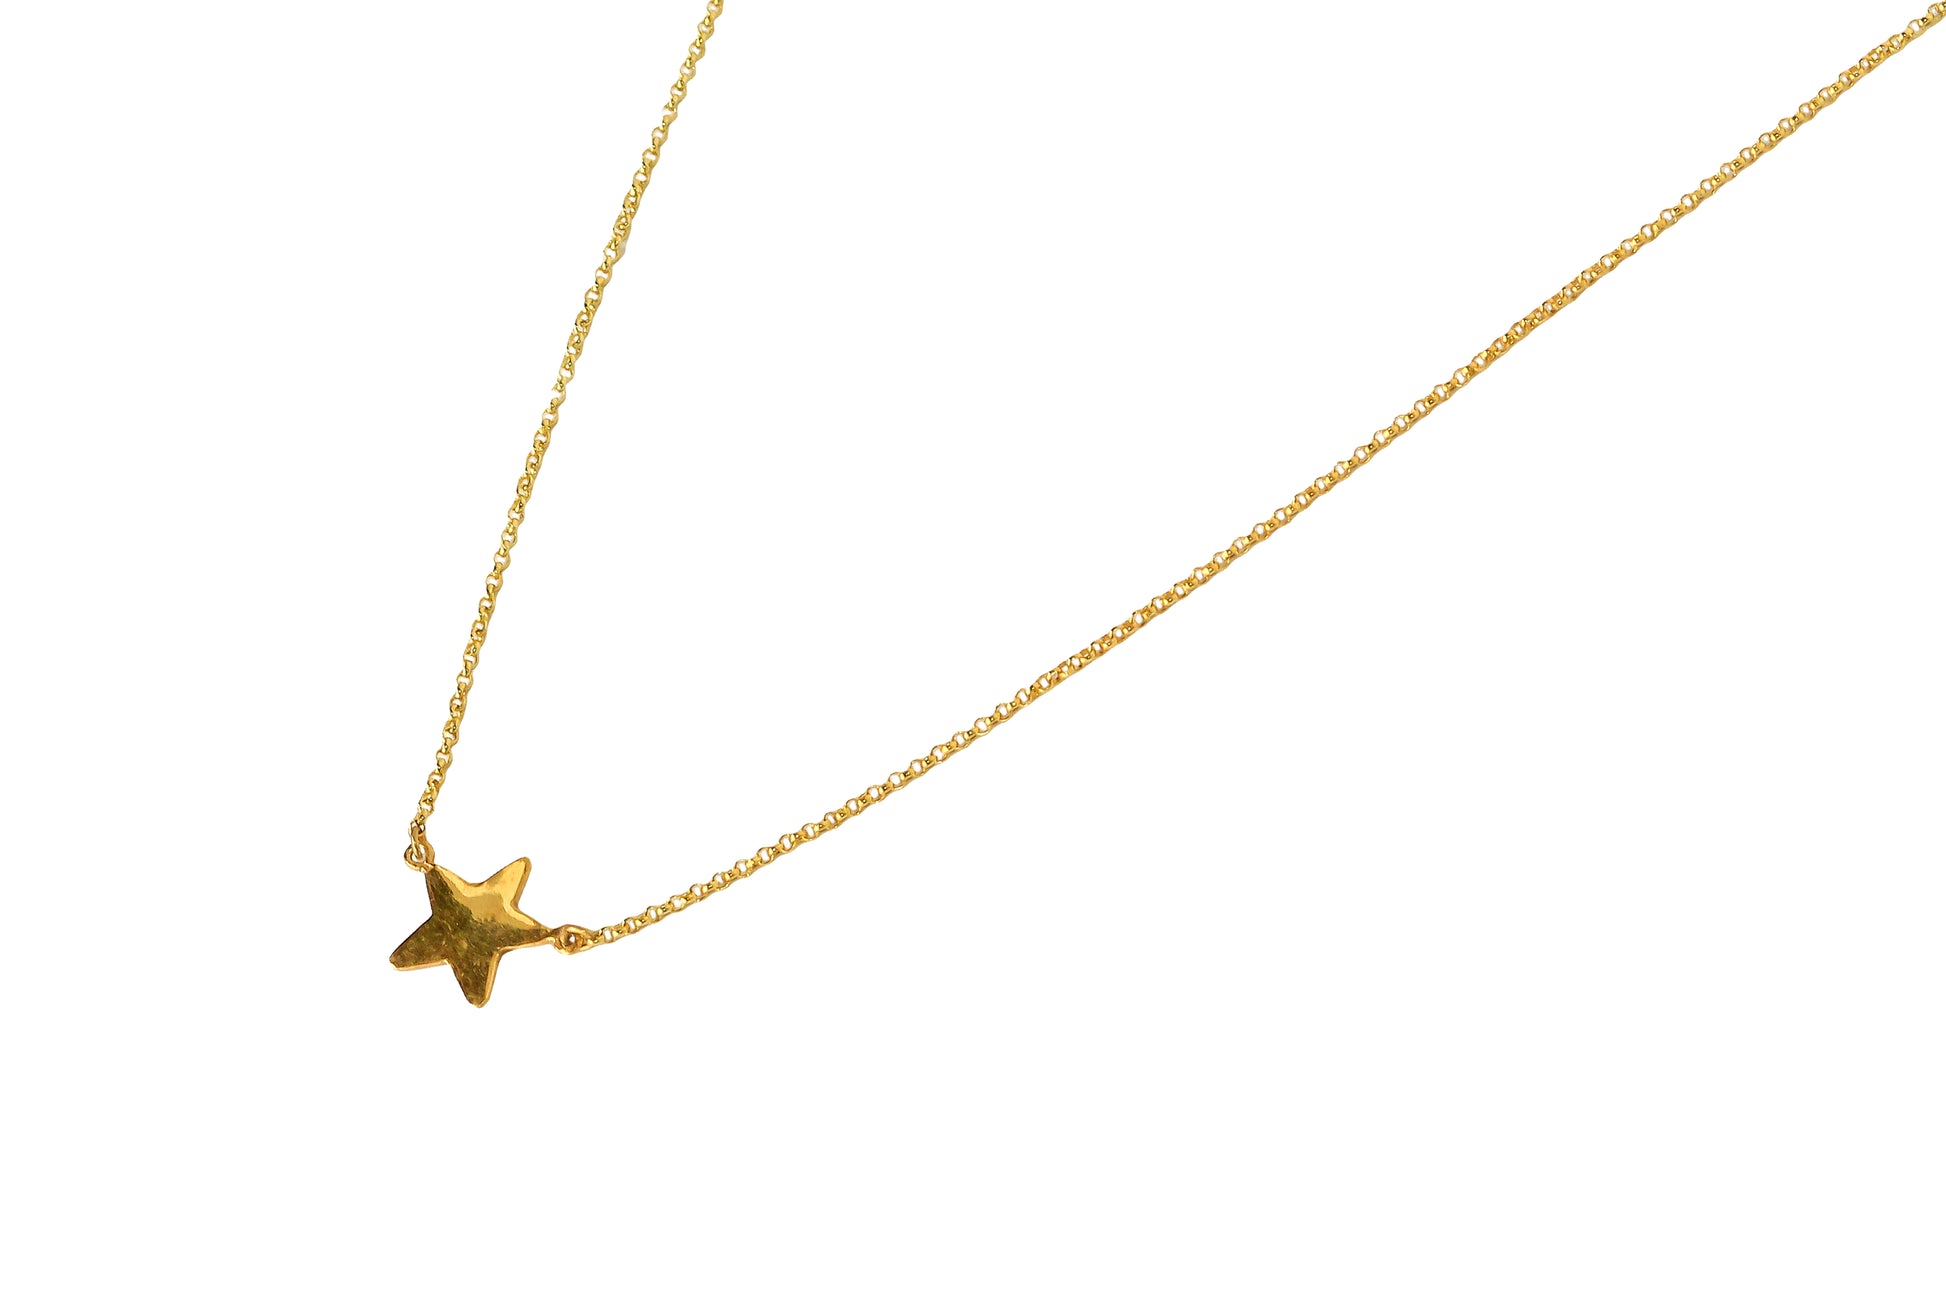 Gold star necklace close up details